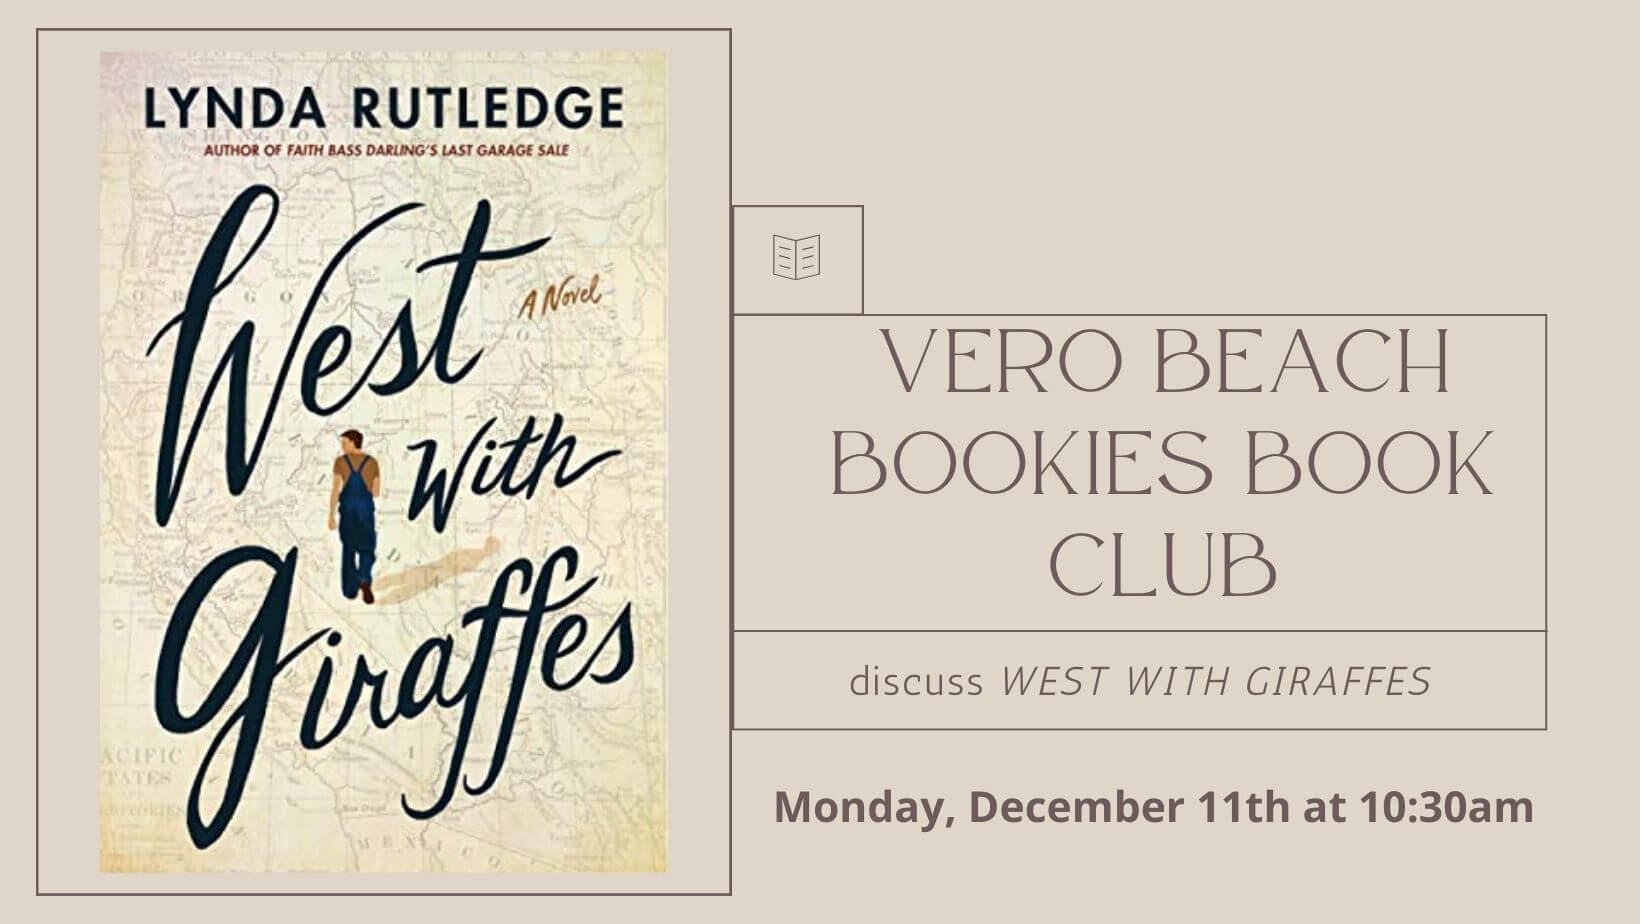 Vero Beach Book Club discusses West With Giraffes